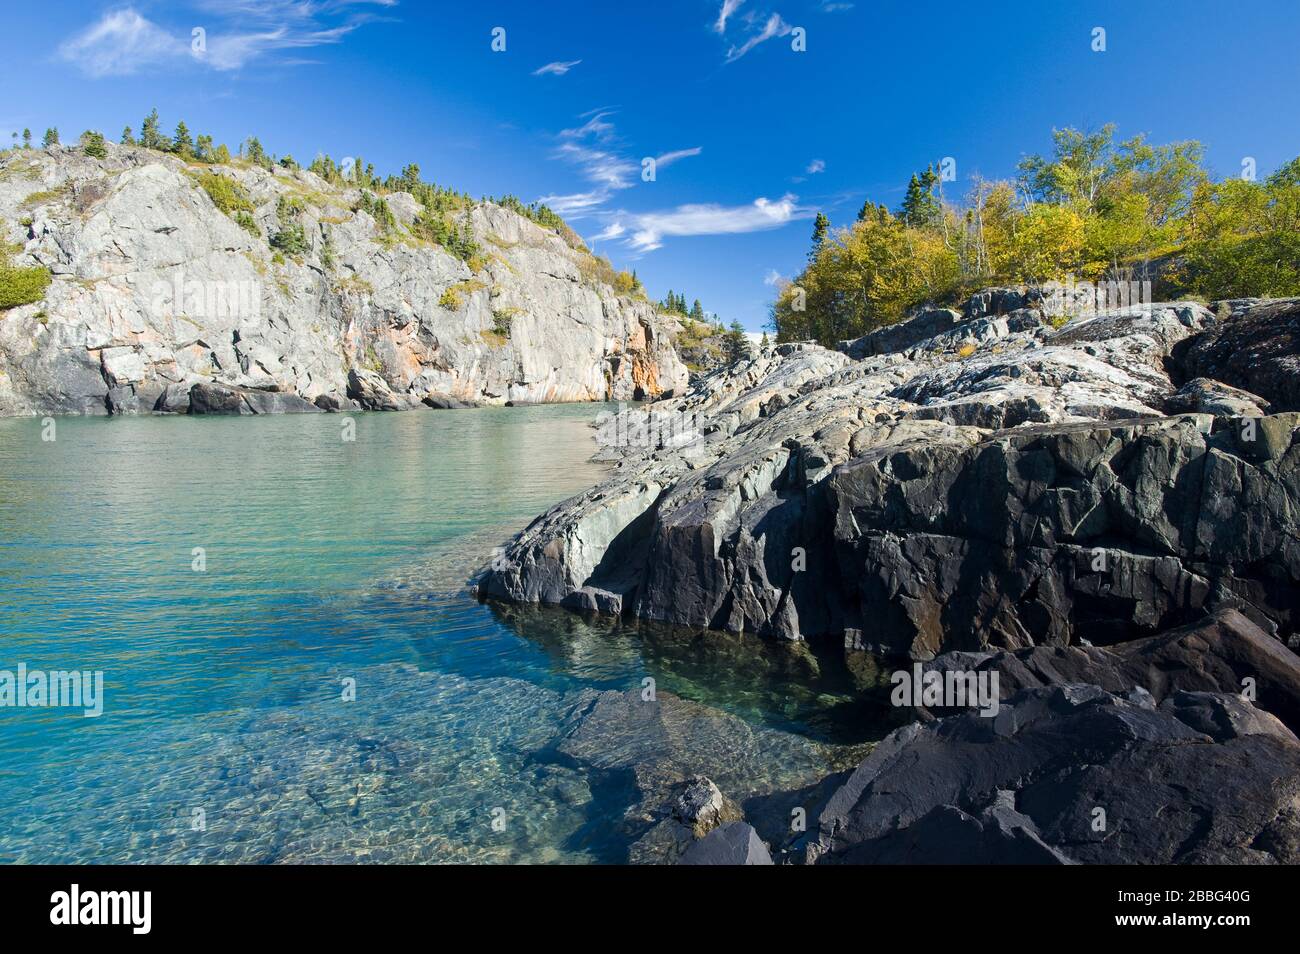 Littoral, parc national Pukaskwa, lac Supérieur, Ontario, Canada Banque D'Images